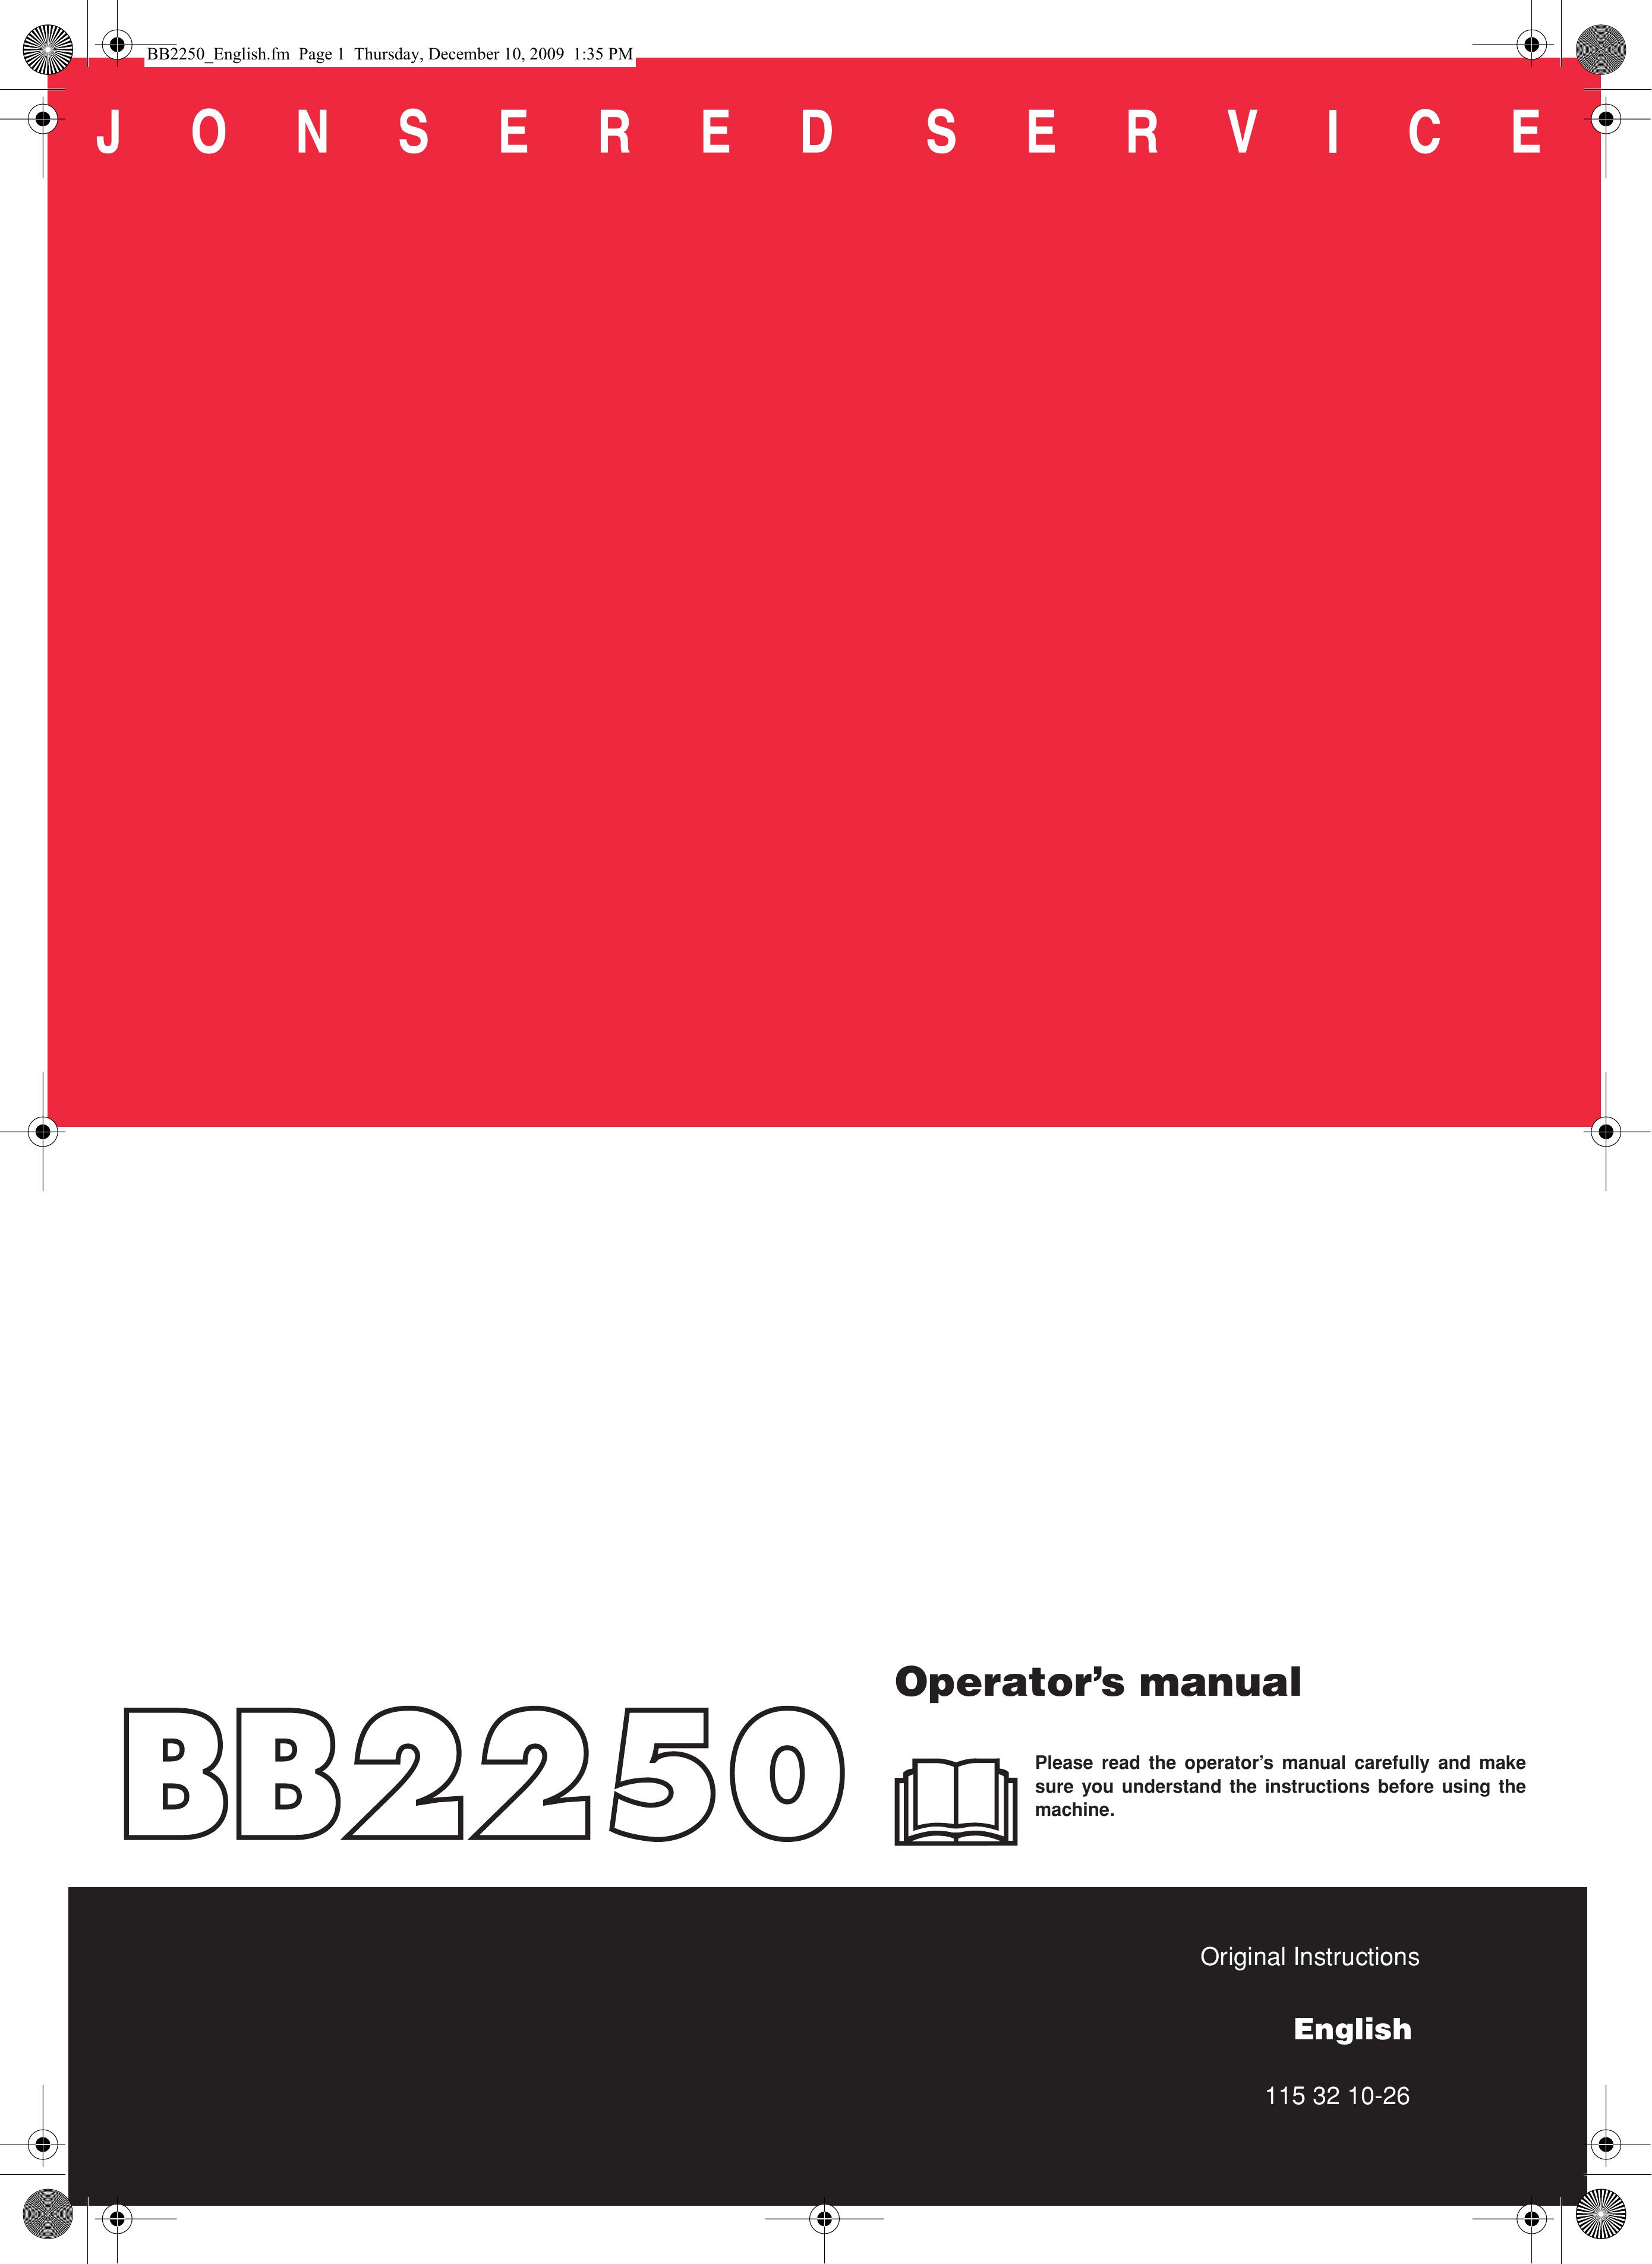 Jonsered BB2250 Blower User Manual